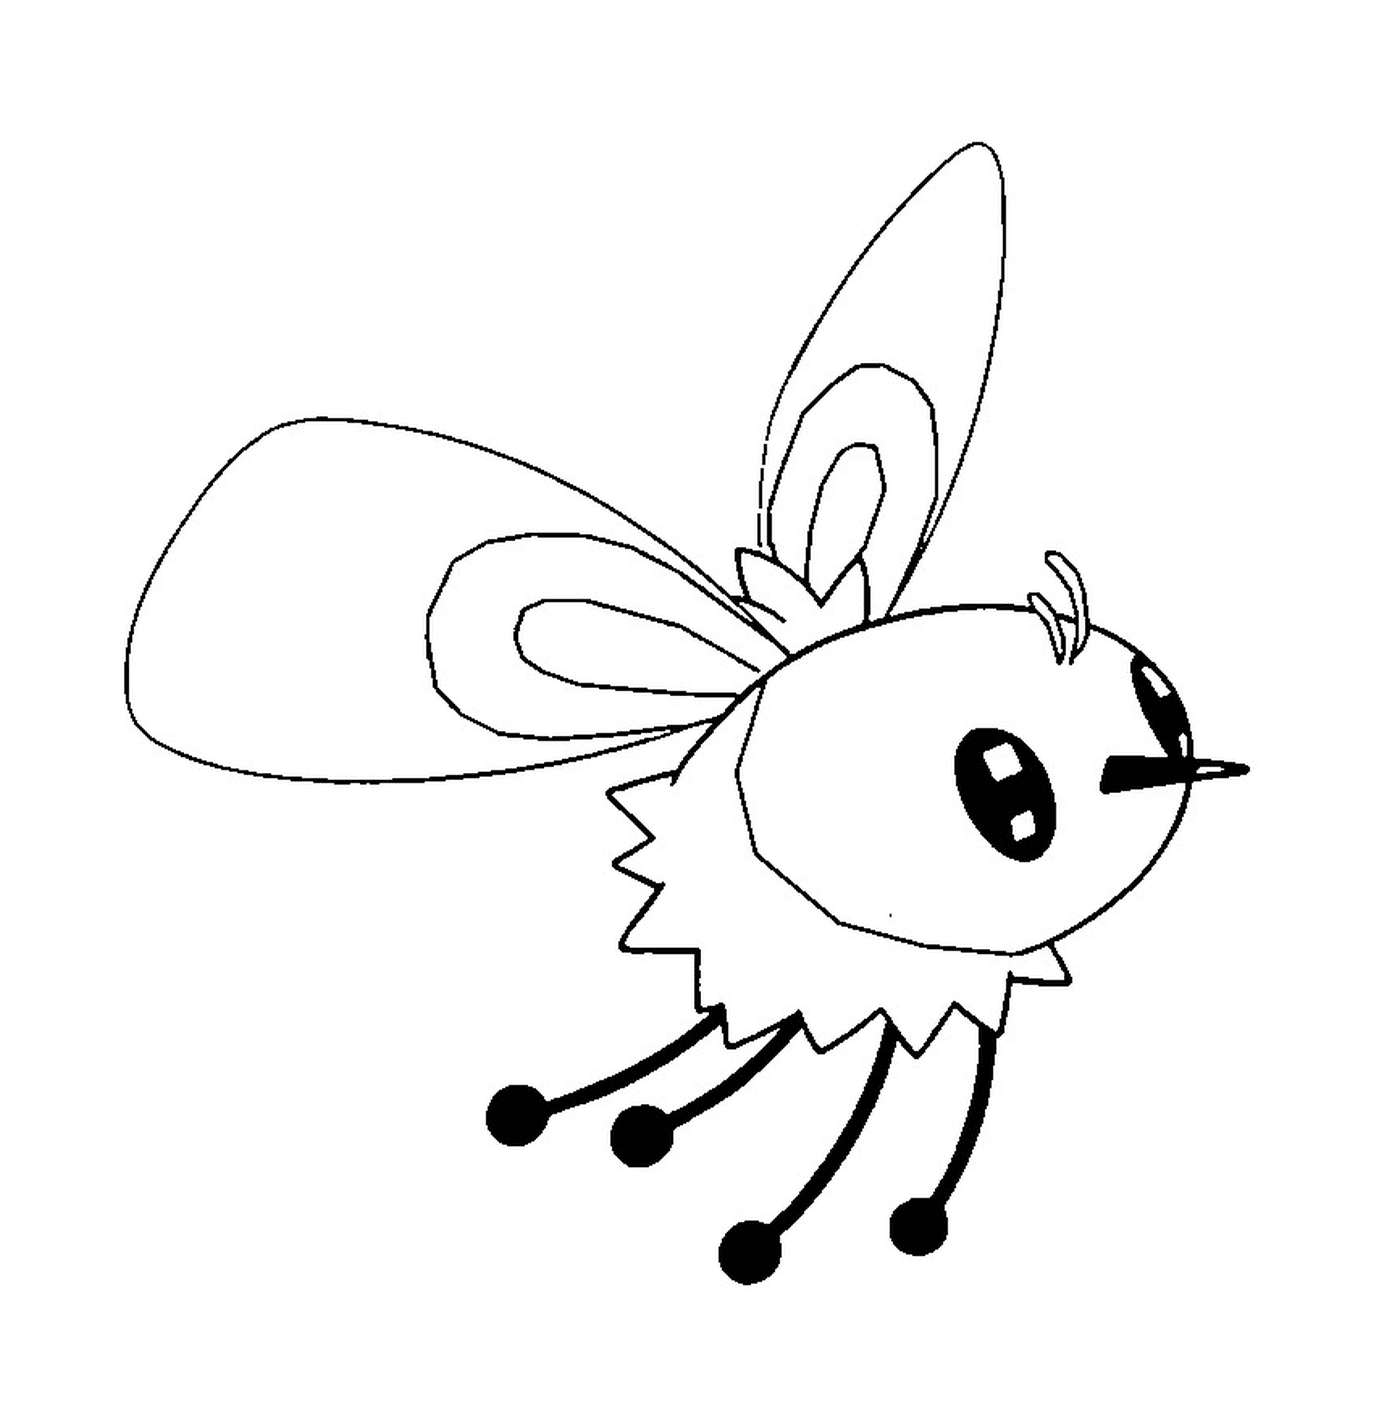  Bombydou, ein Insekt 